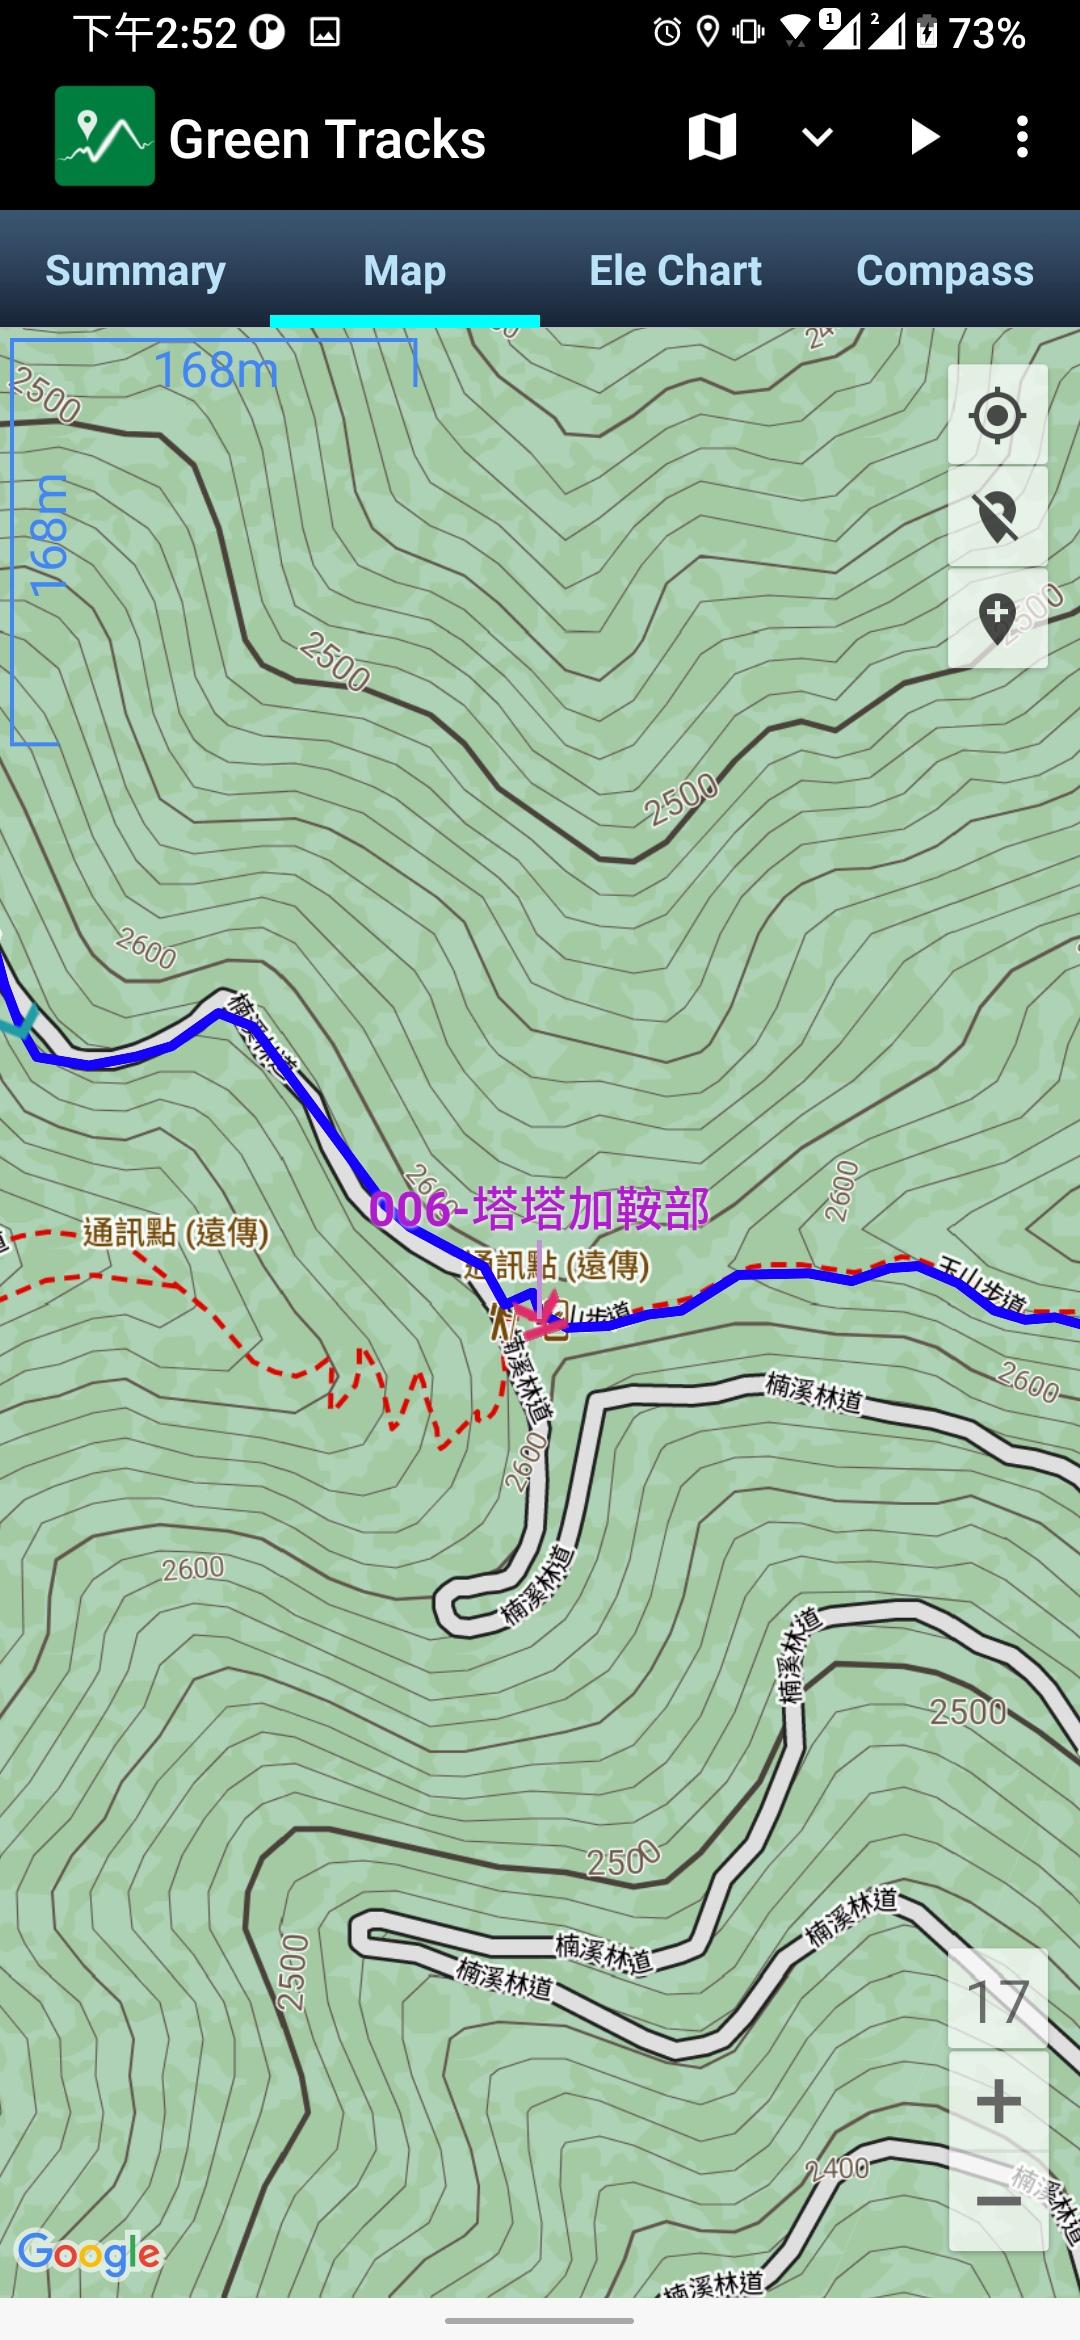 Green Tracks hiking partner V7.8.6 Screenshot 2